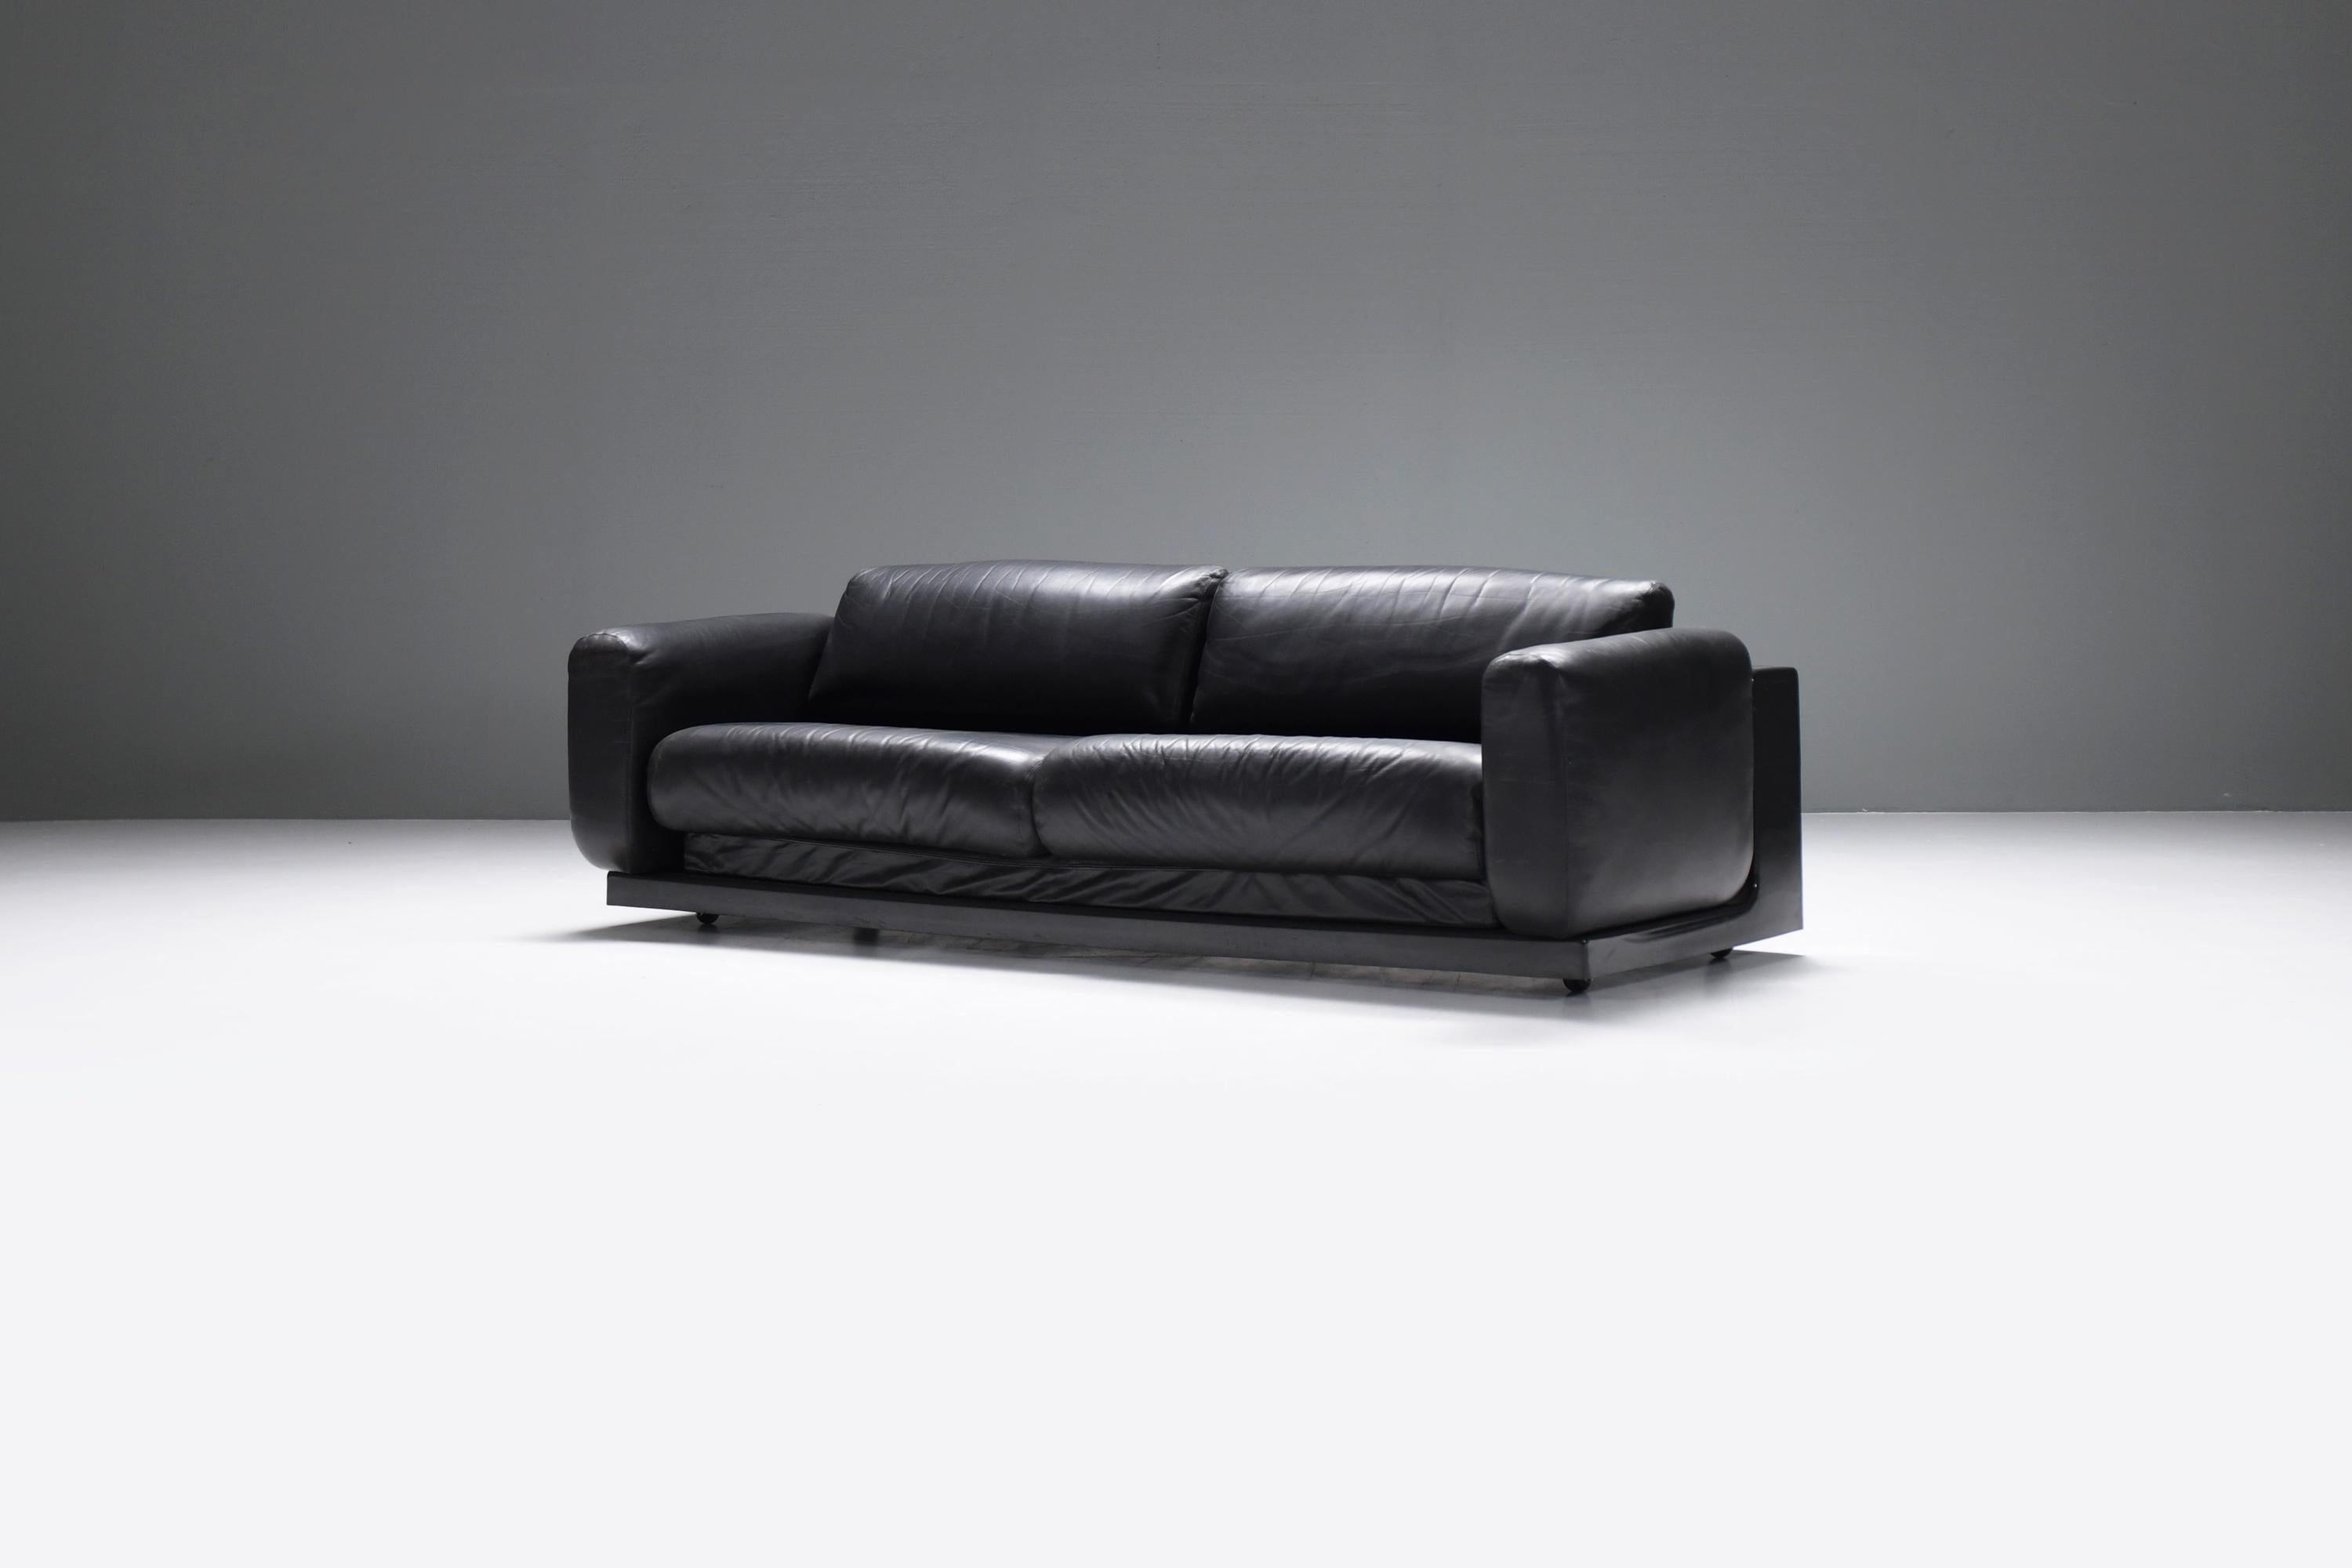 
Gradual lounge sofa - Cini Boeri - Knoll
Stunning & rare Gradual sofa in black leather.
Designed by Cini Boeri for Knoll.

In 1970, Boeri introduced her first piece designed specifically for Knoll—the Gradual Lounge, an innovative, modular and